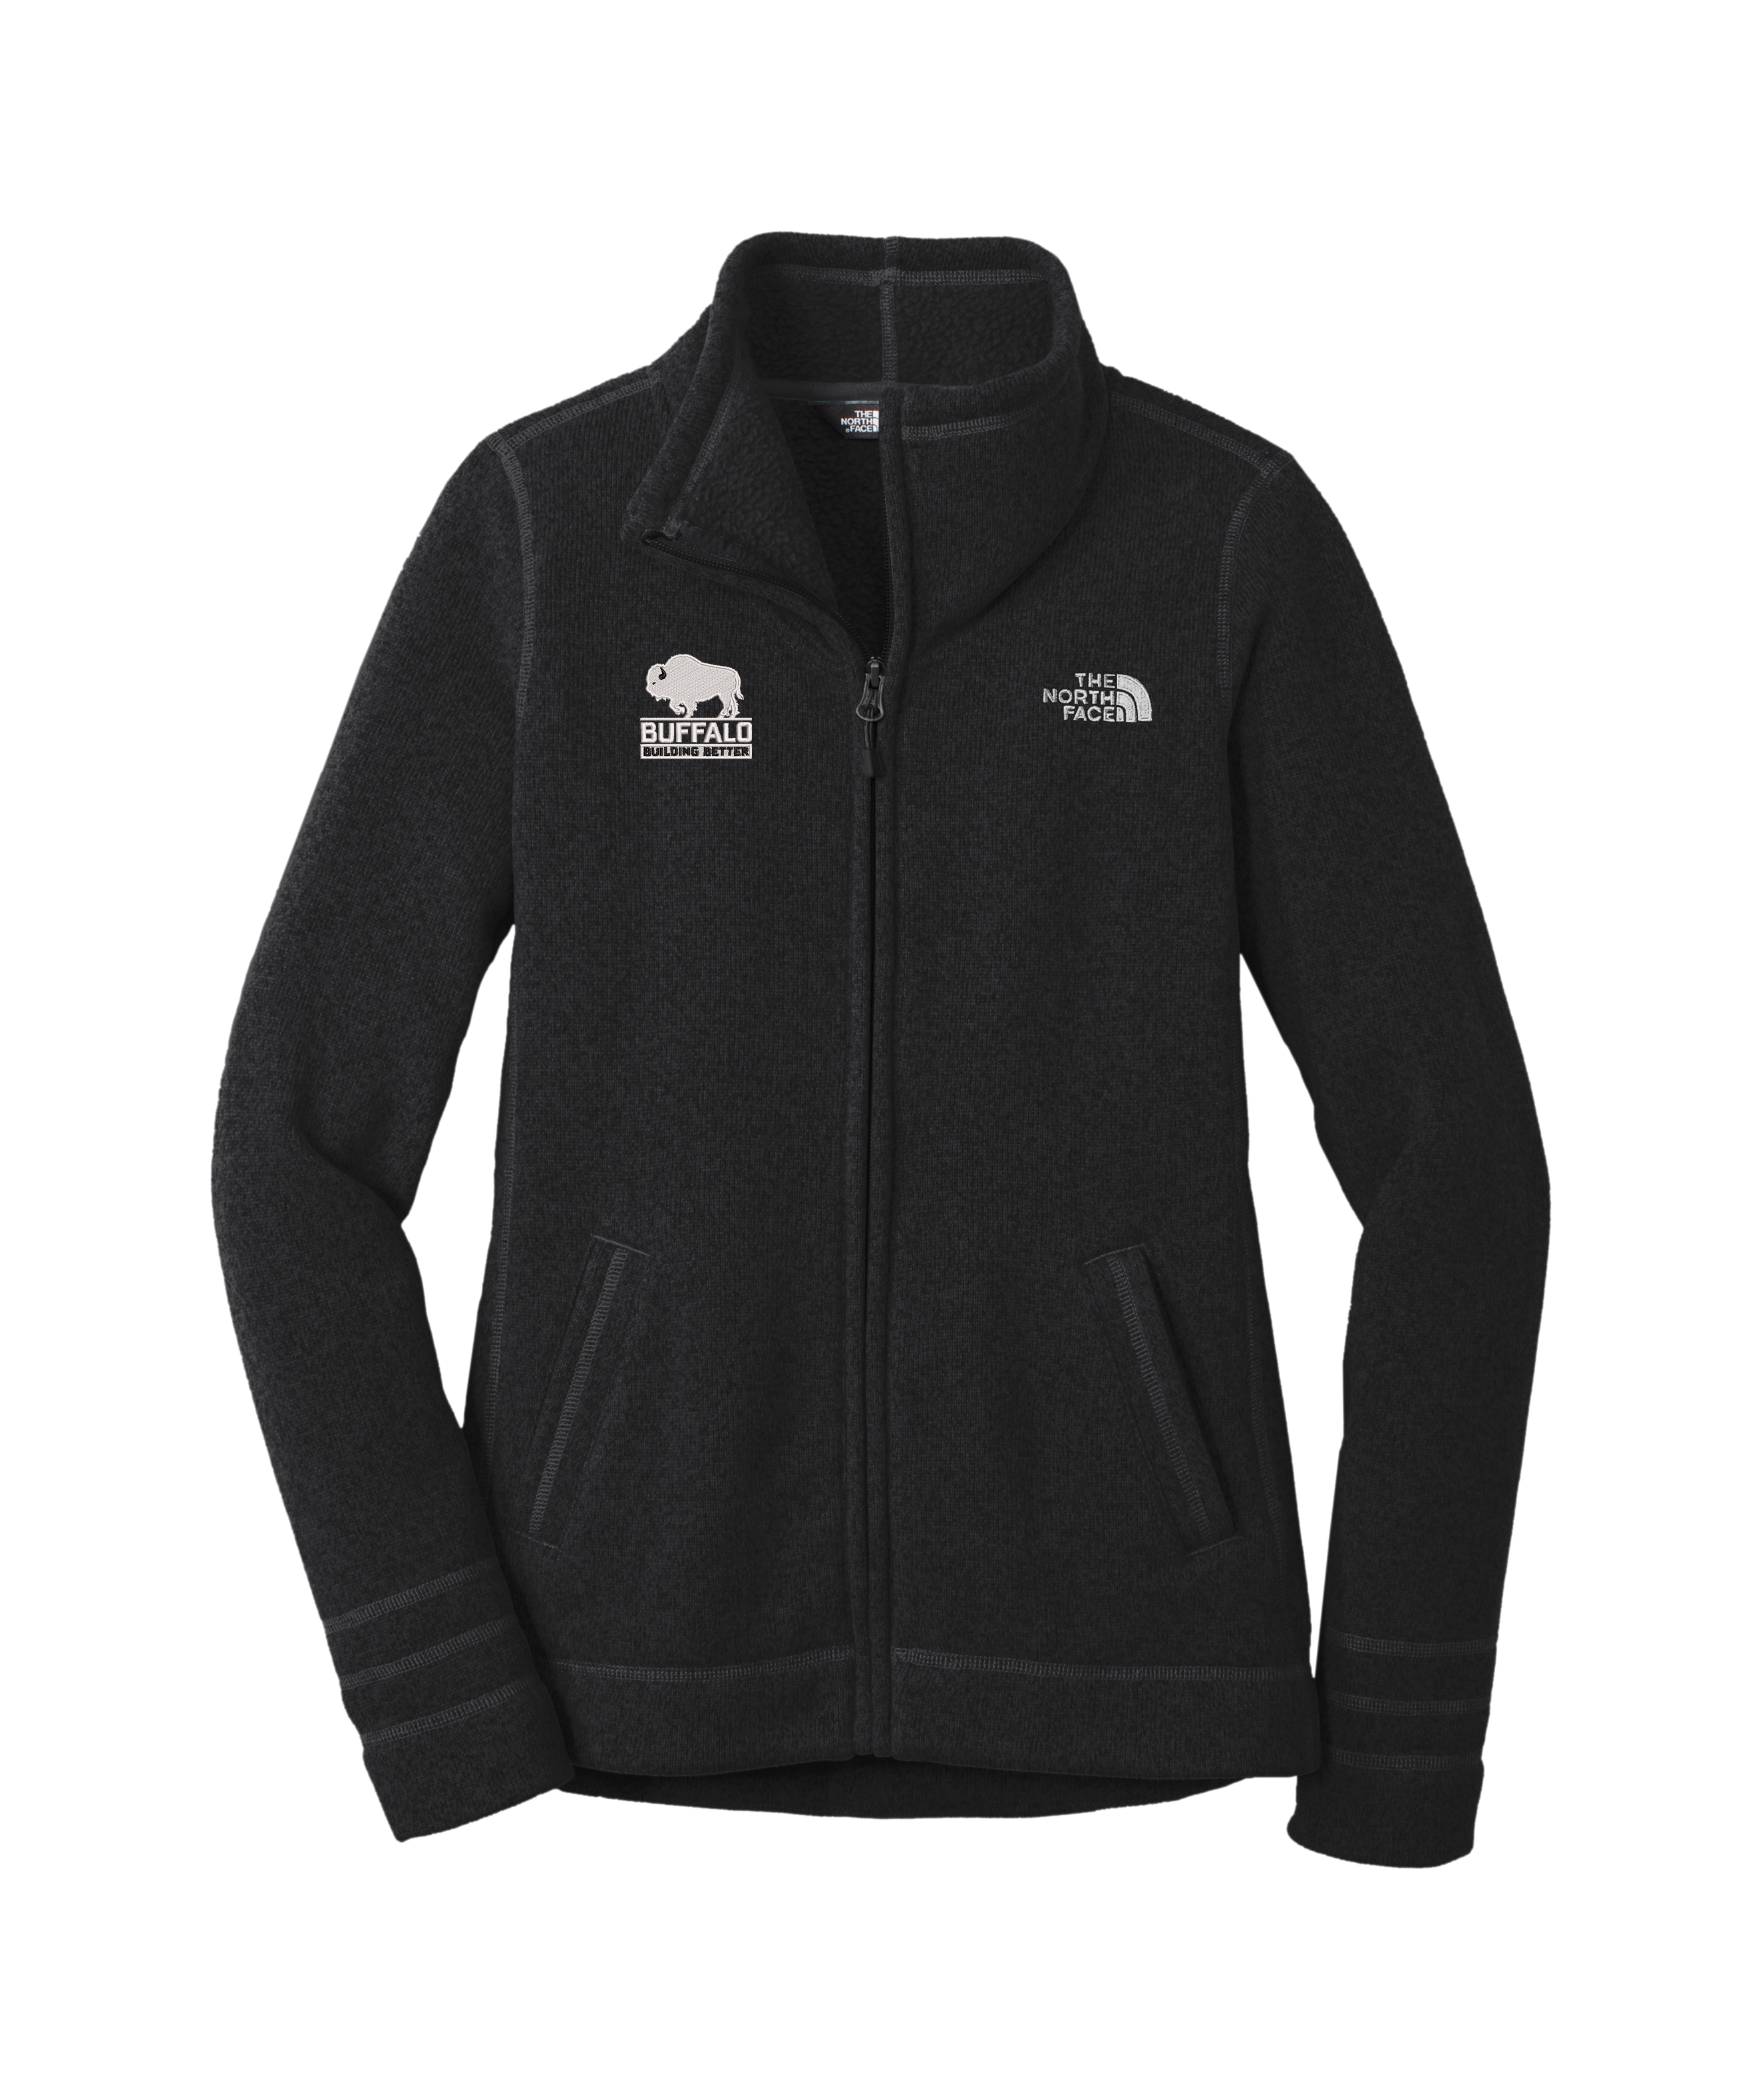 The North Face® Ladies Sweater Fleece Jacket – Buffalo Construction